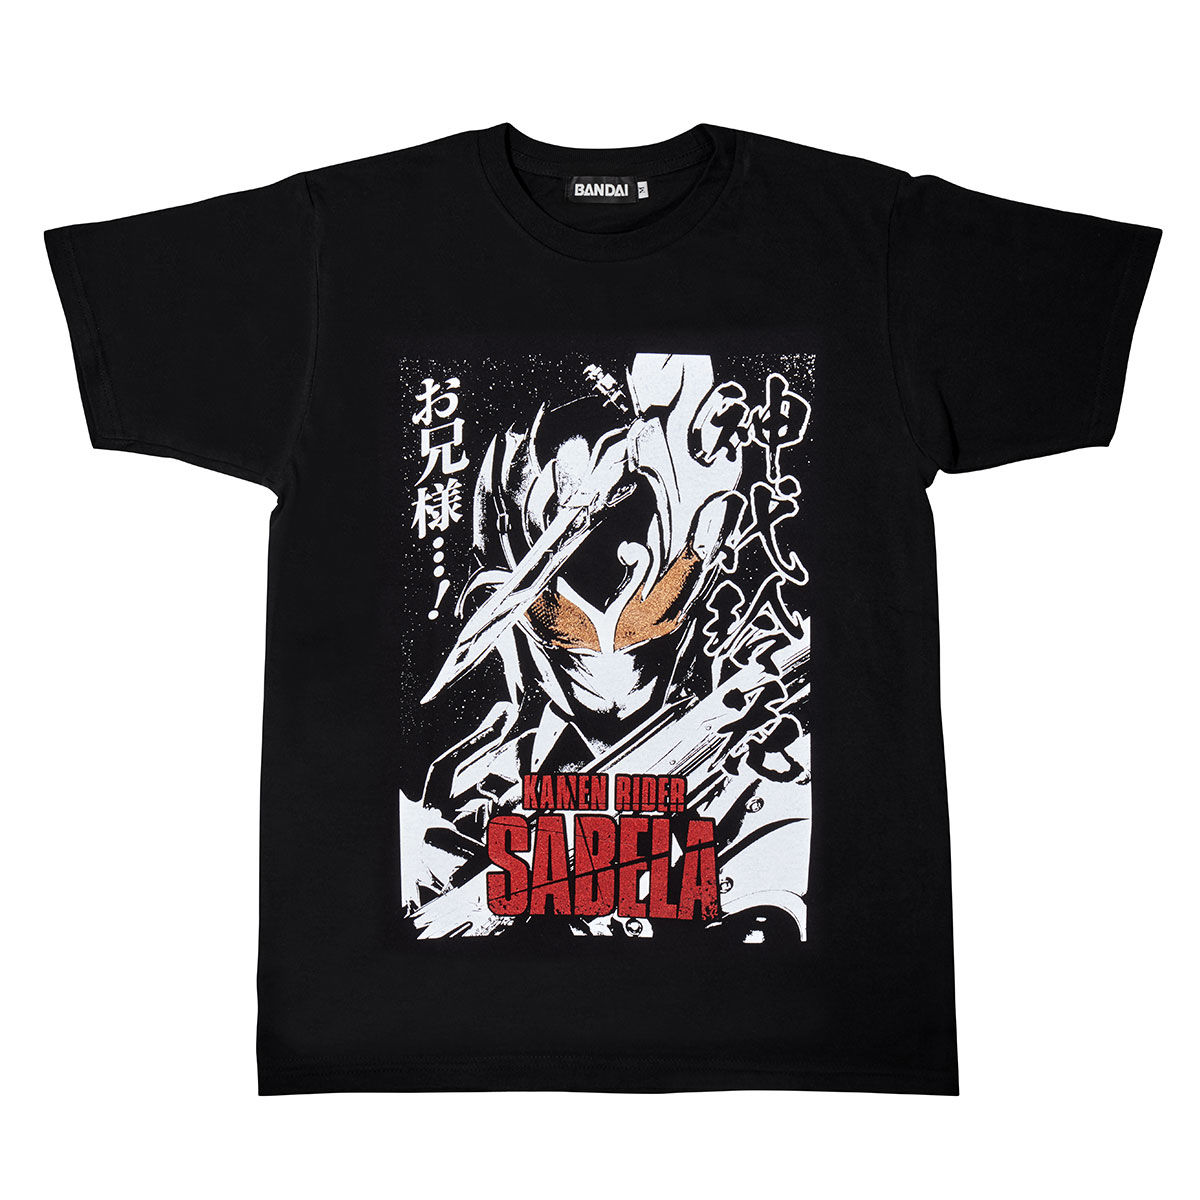 Kamen Rider Saber Reika Shindai T-shirt [Dec 2021 Delivery]